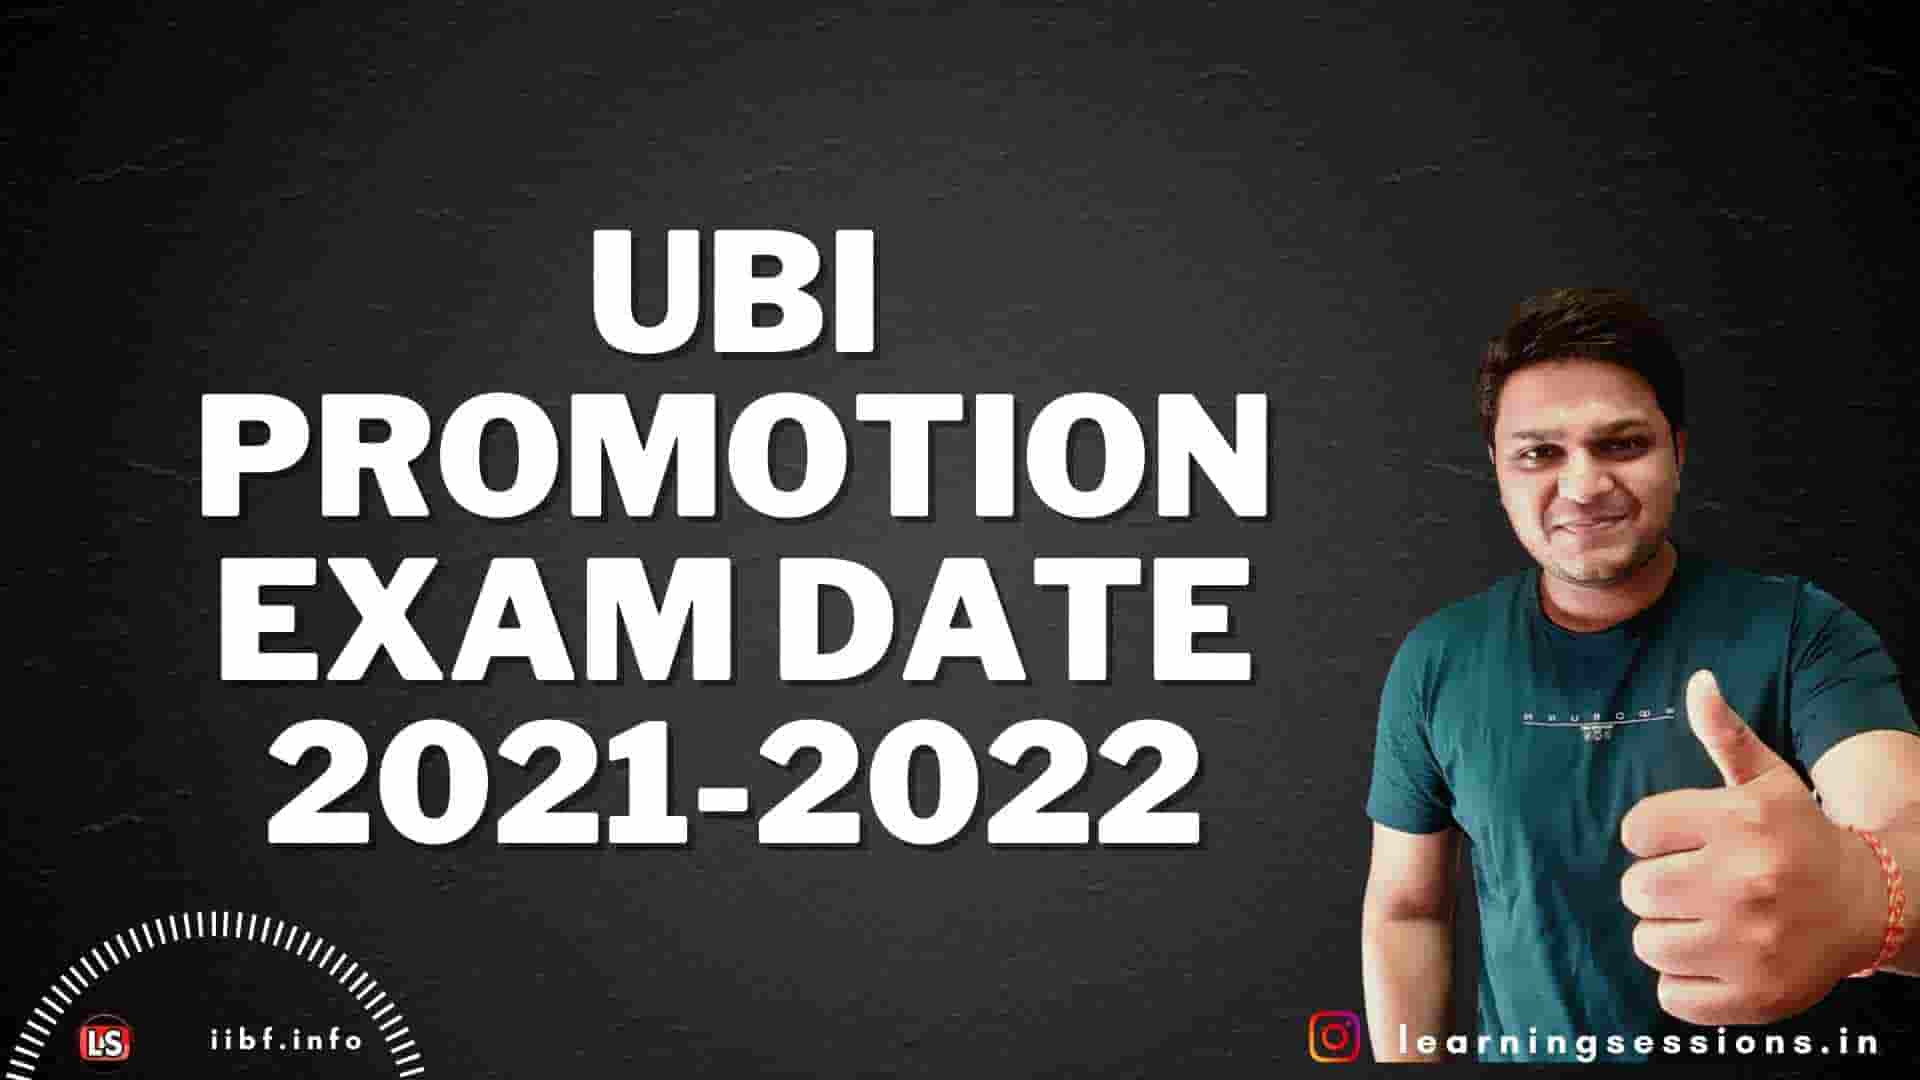 UBI PROMOTION EXAM DATE 2021-2022